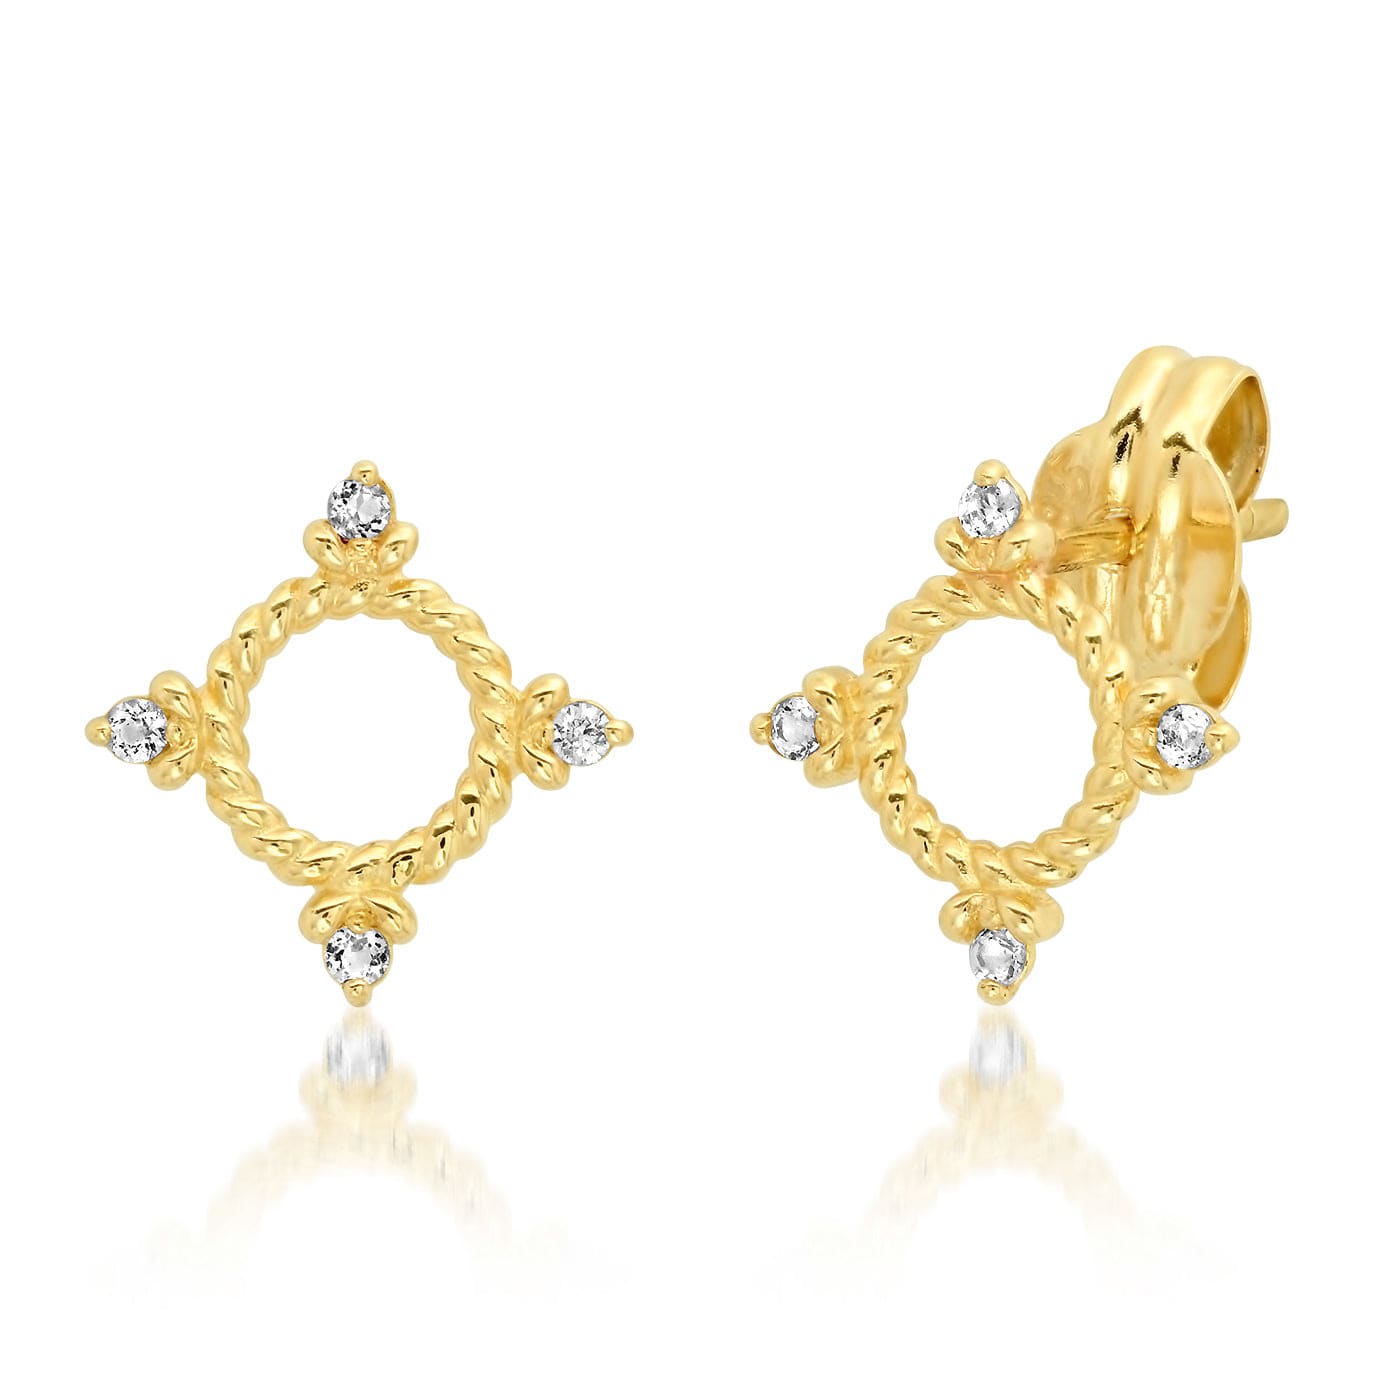 TAI JEWELRY Earrings 14k Gold 14k Twisted Gold Compass Earrings